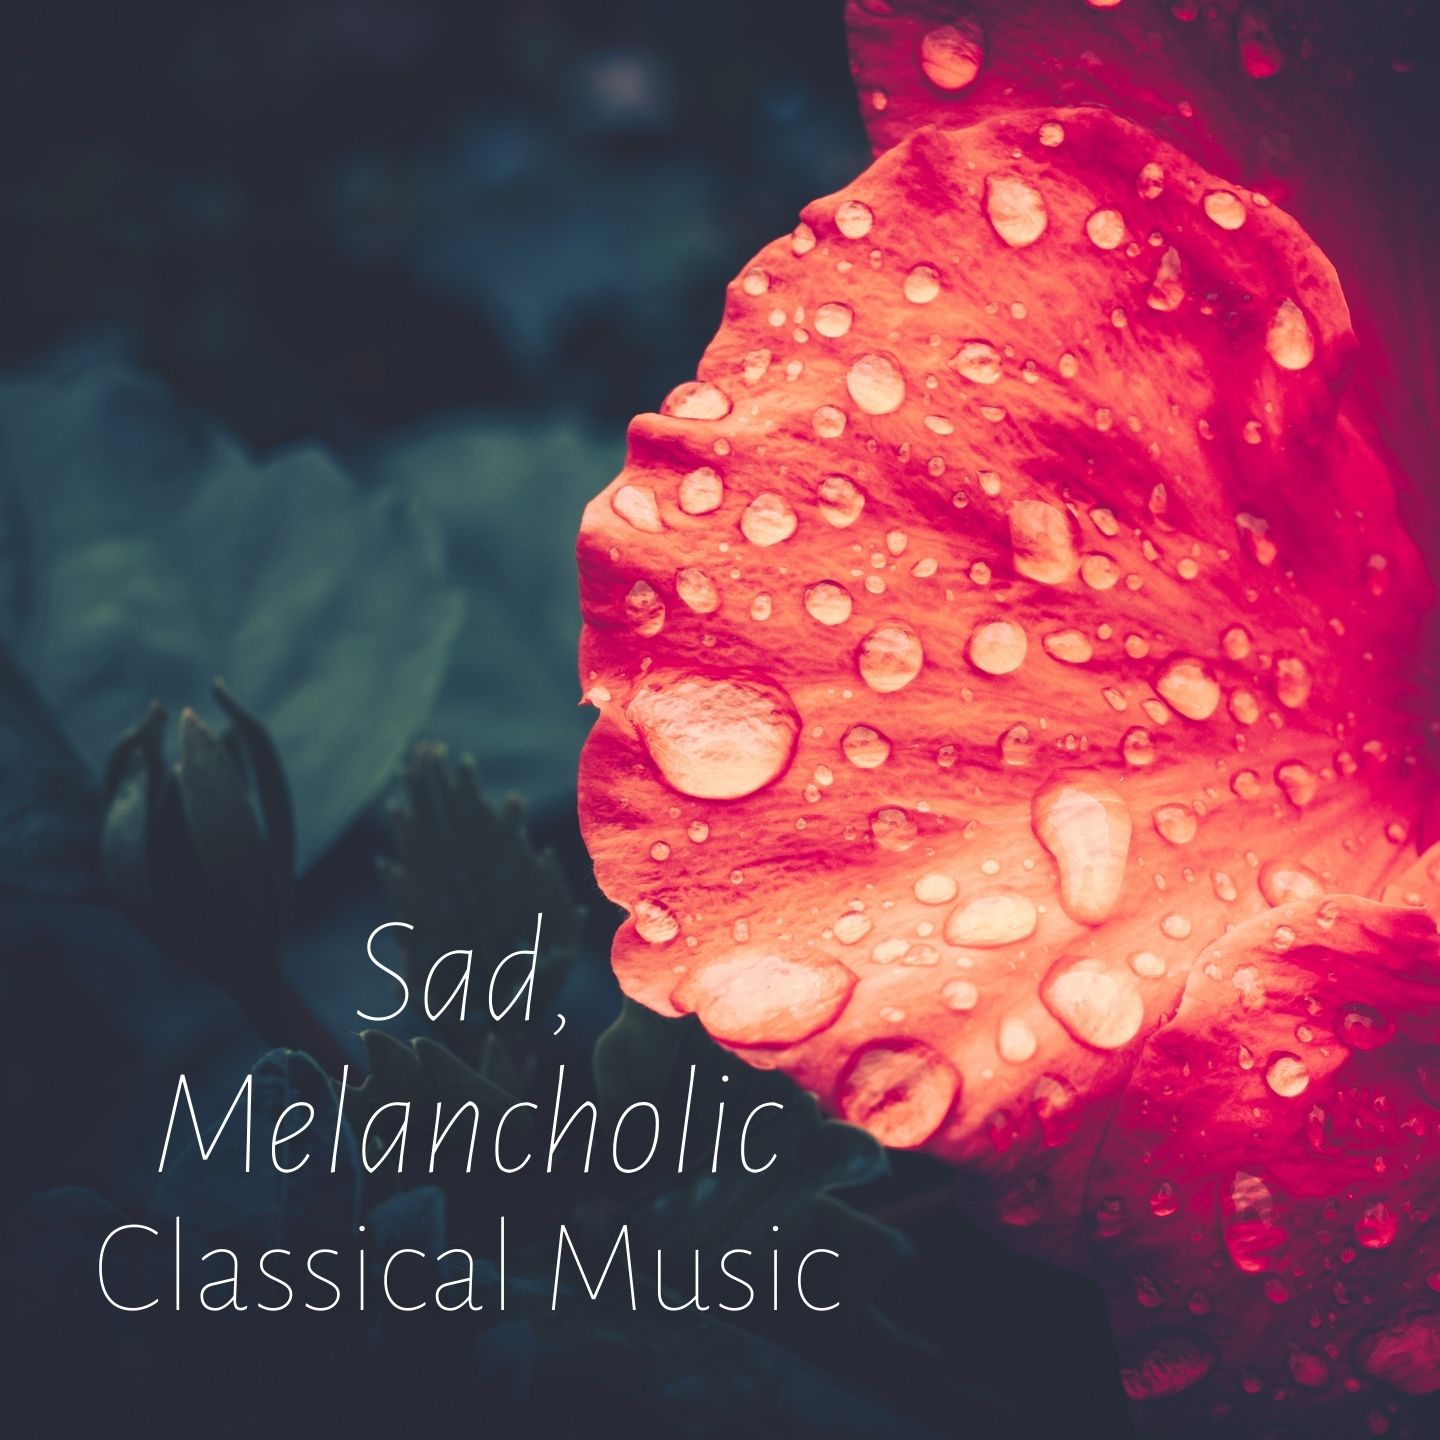 Sad, Melancholic Classical Music